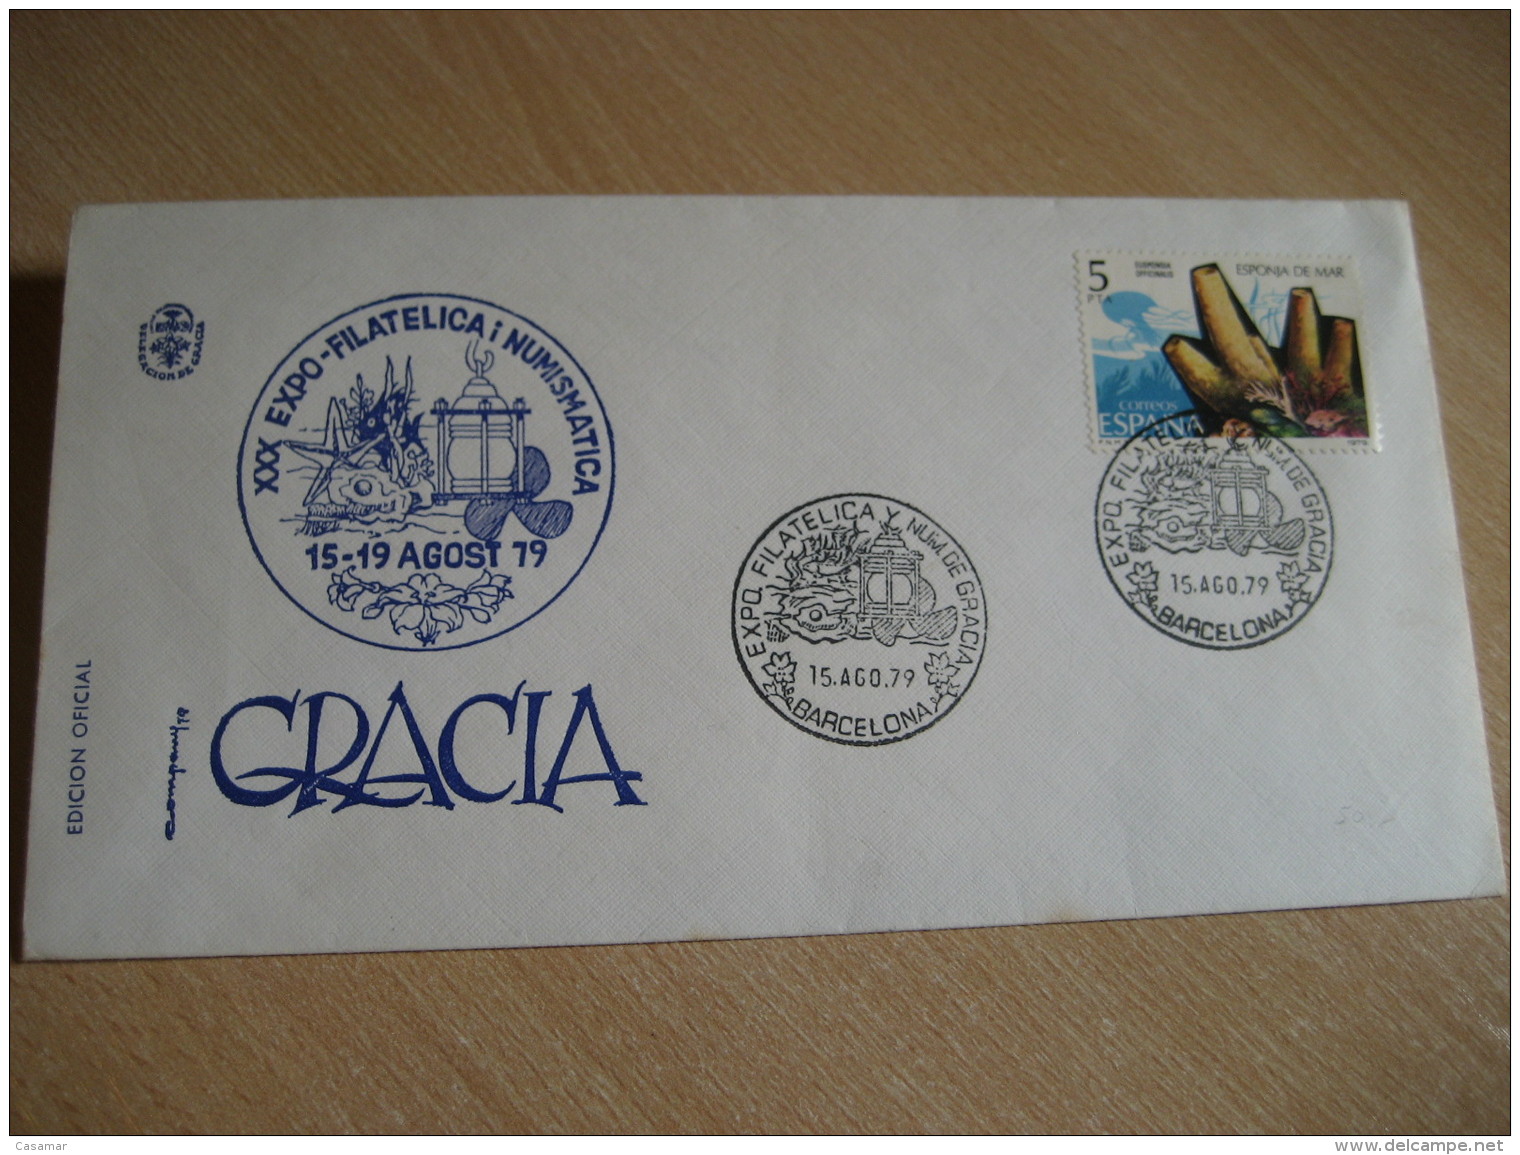 DIVING Expo Gracia BARCELONA 1979 Cancel Cover SPAIN - Tauchen